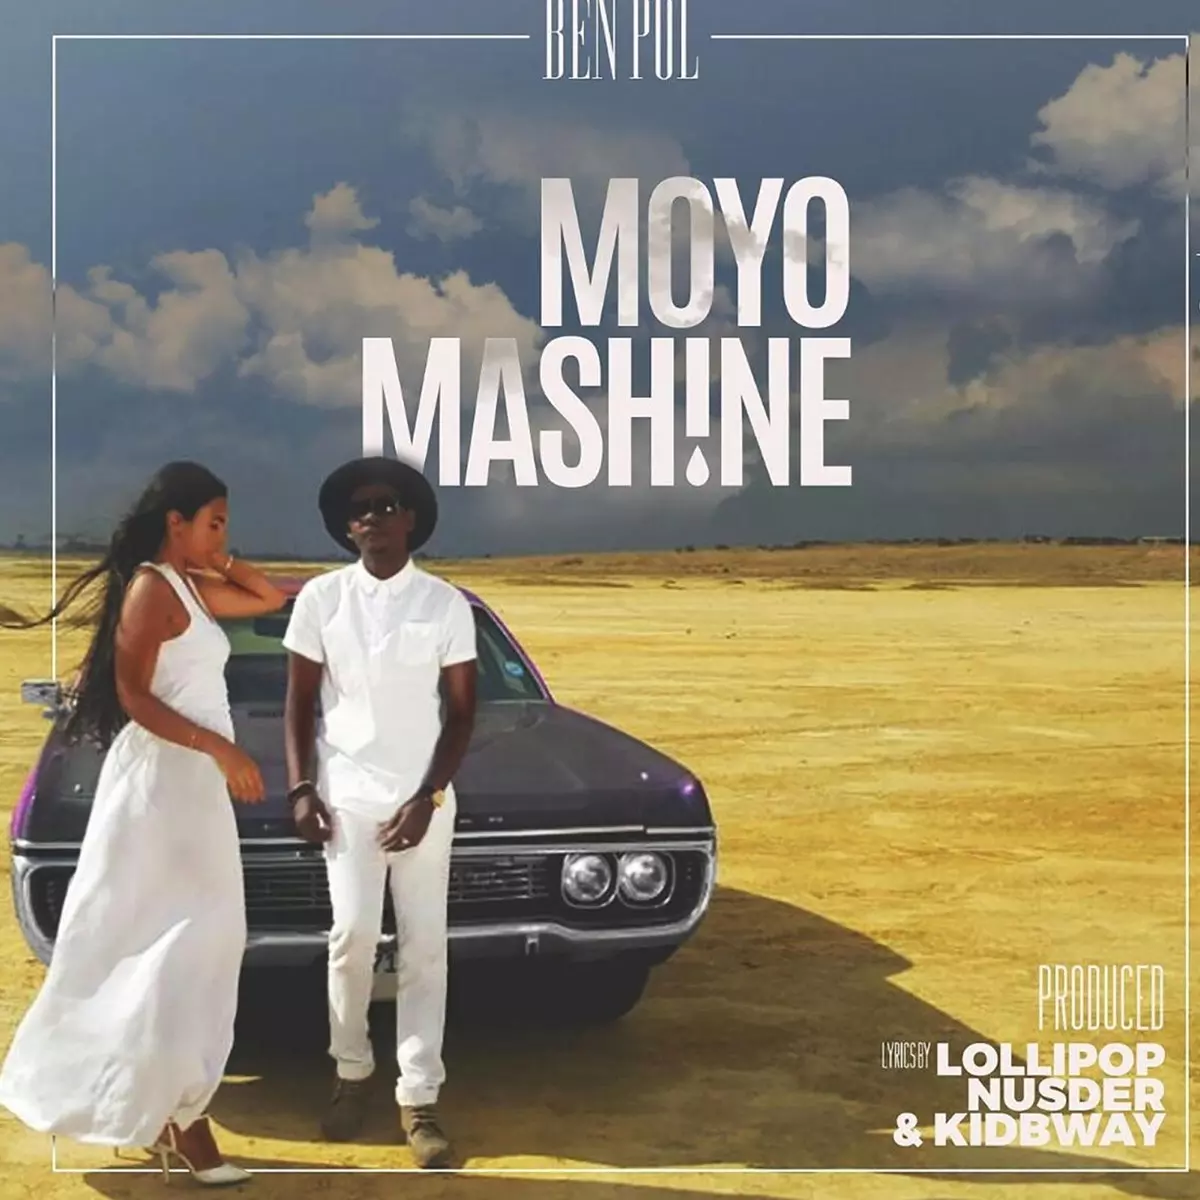 Moyo Mashine - Single by Ben Pol on Apple Music